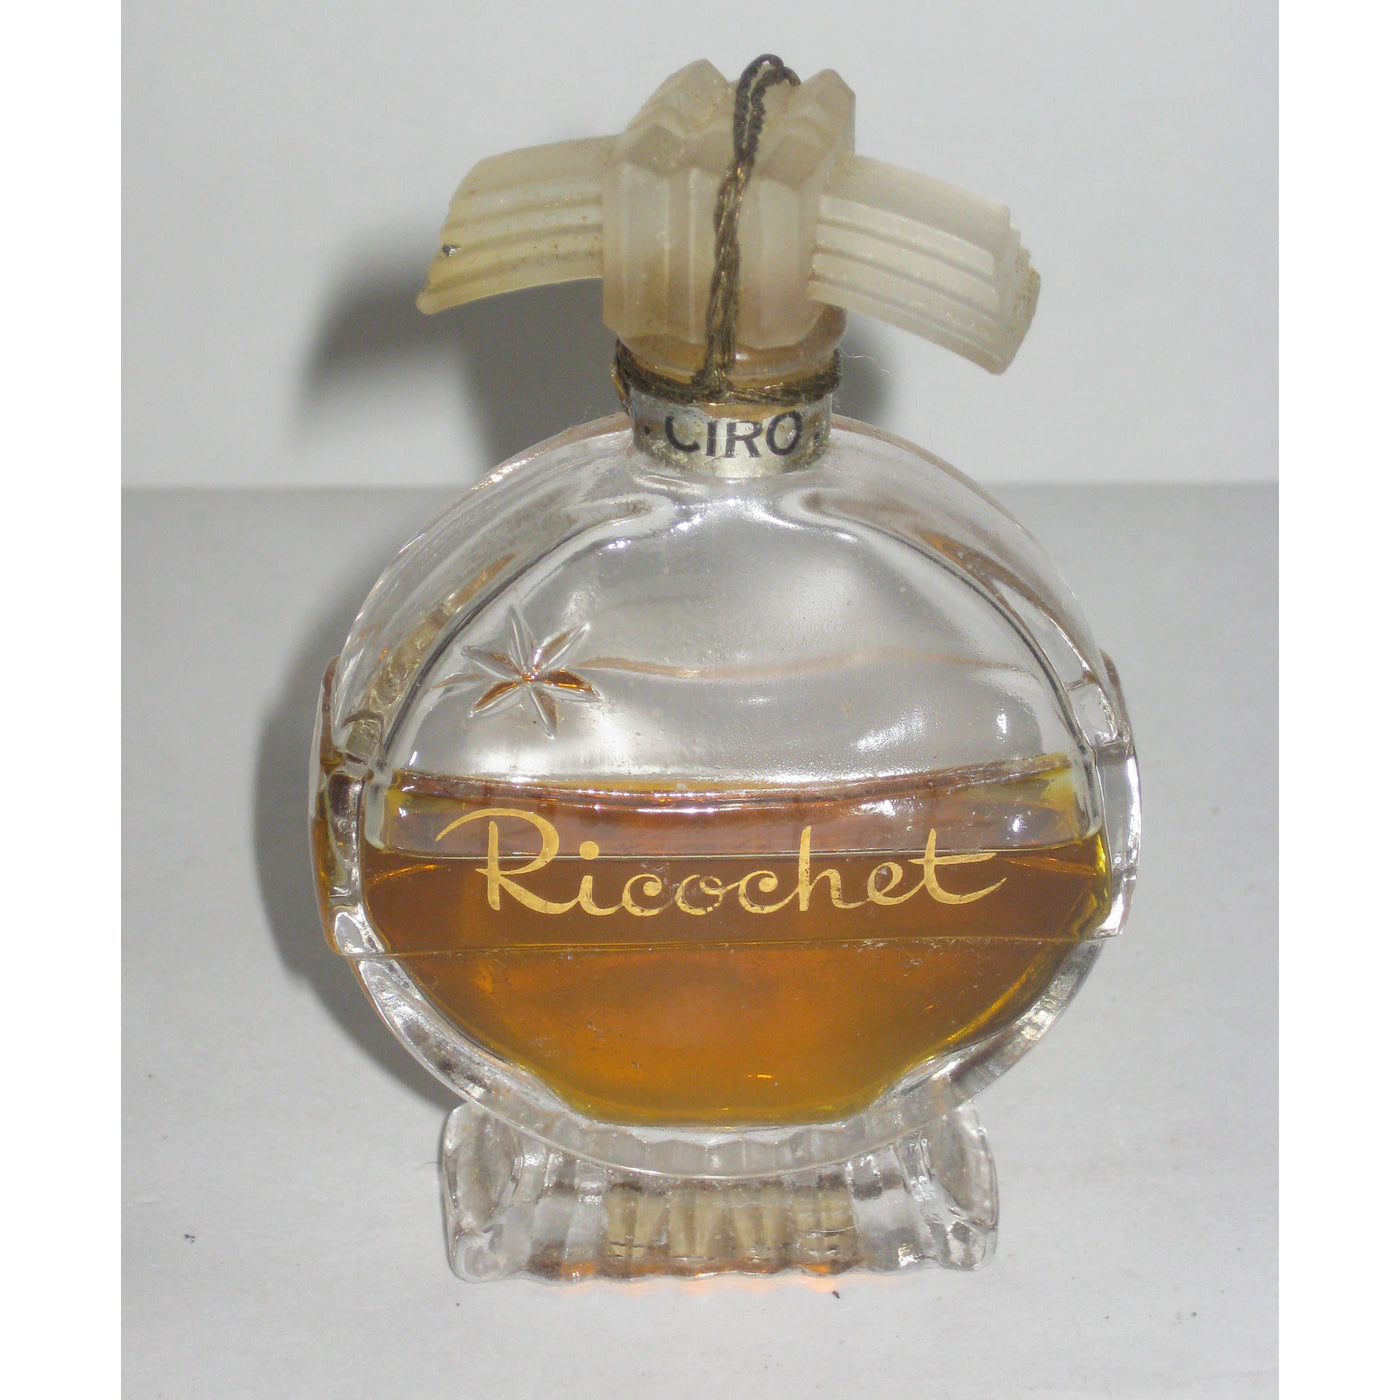 Vintage Ciro Ricochet Parfum